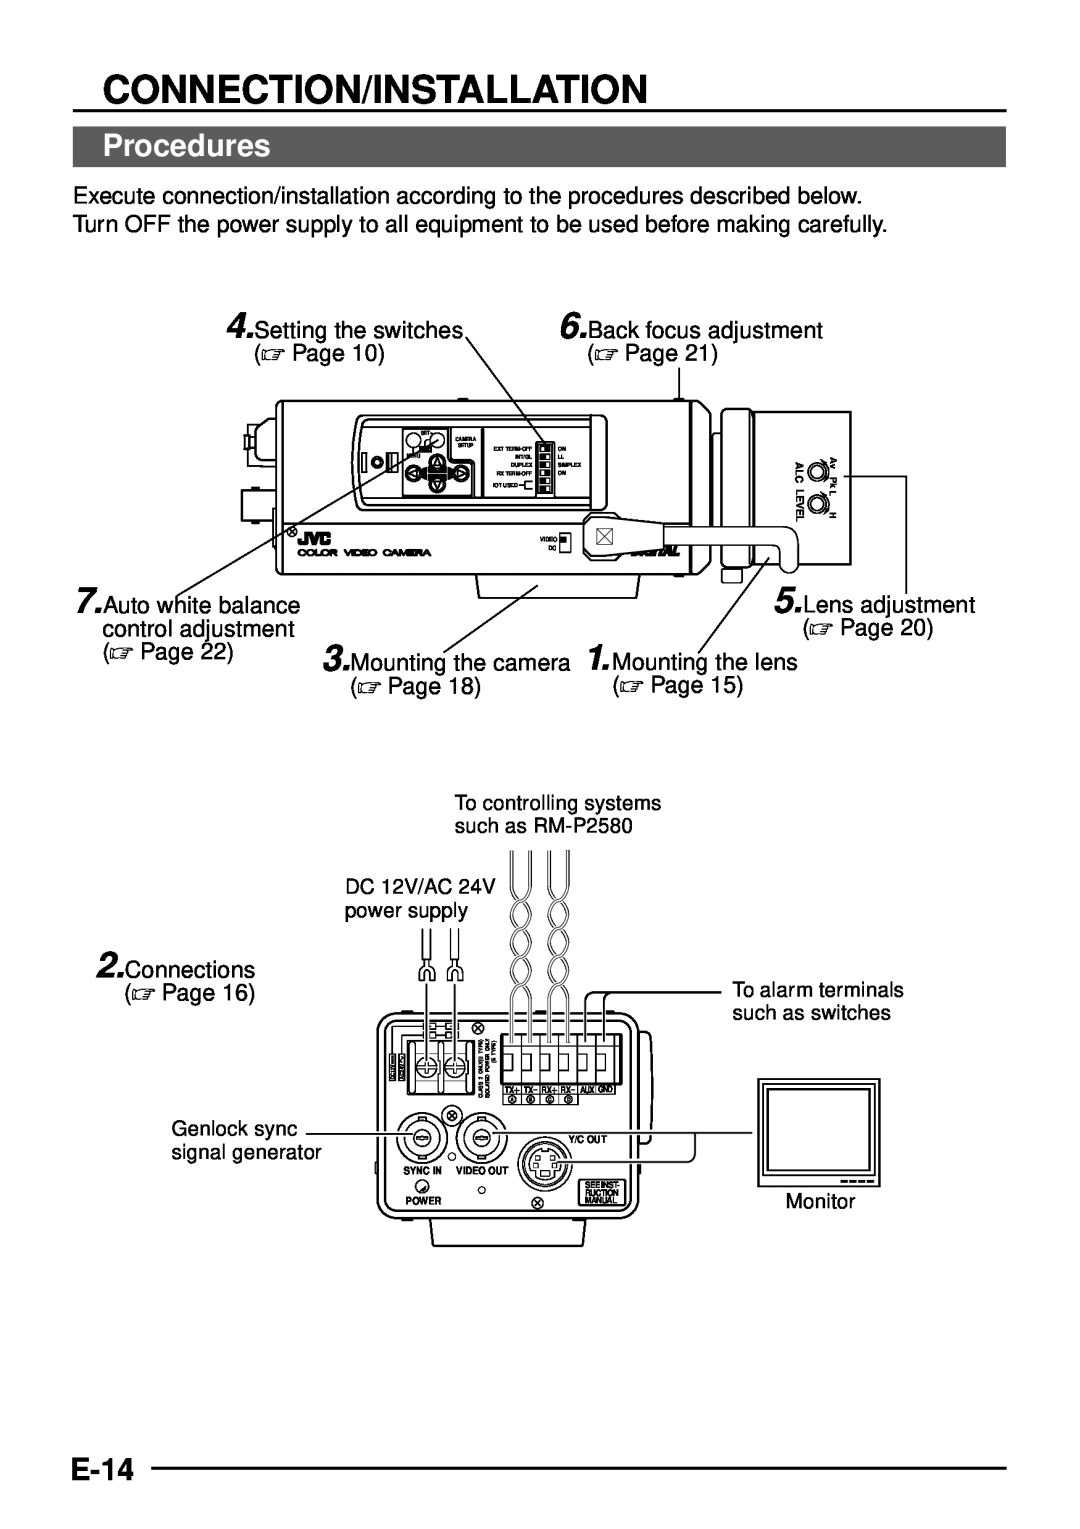 JVC TK-C1460 manual Connection/Installation, Procedures, E-14 